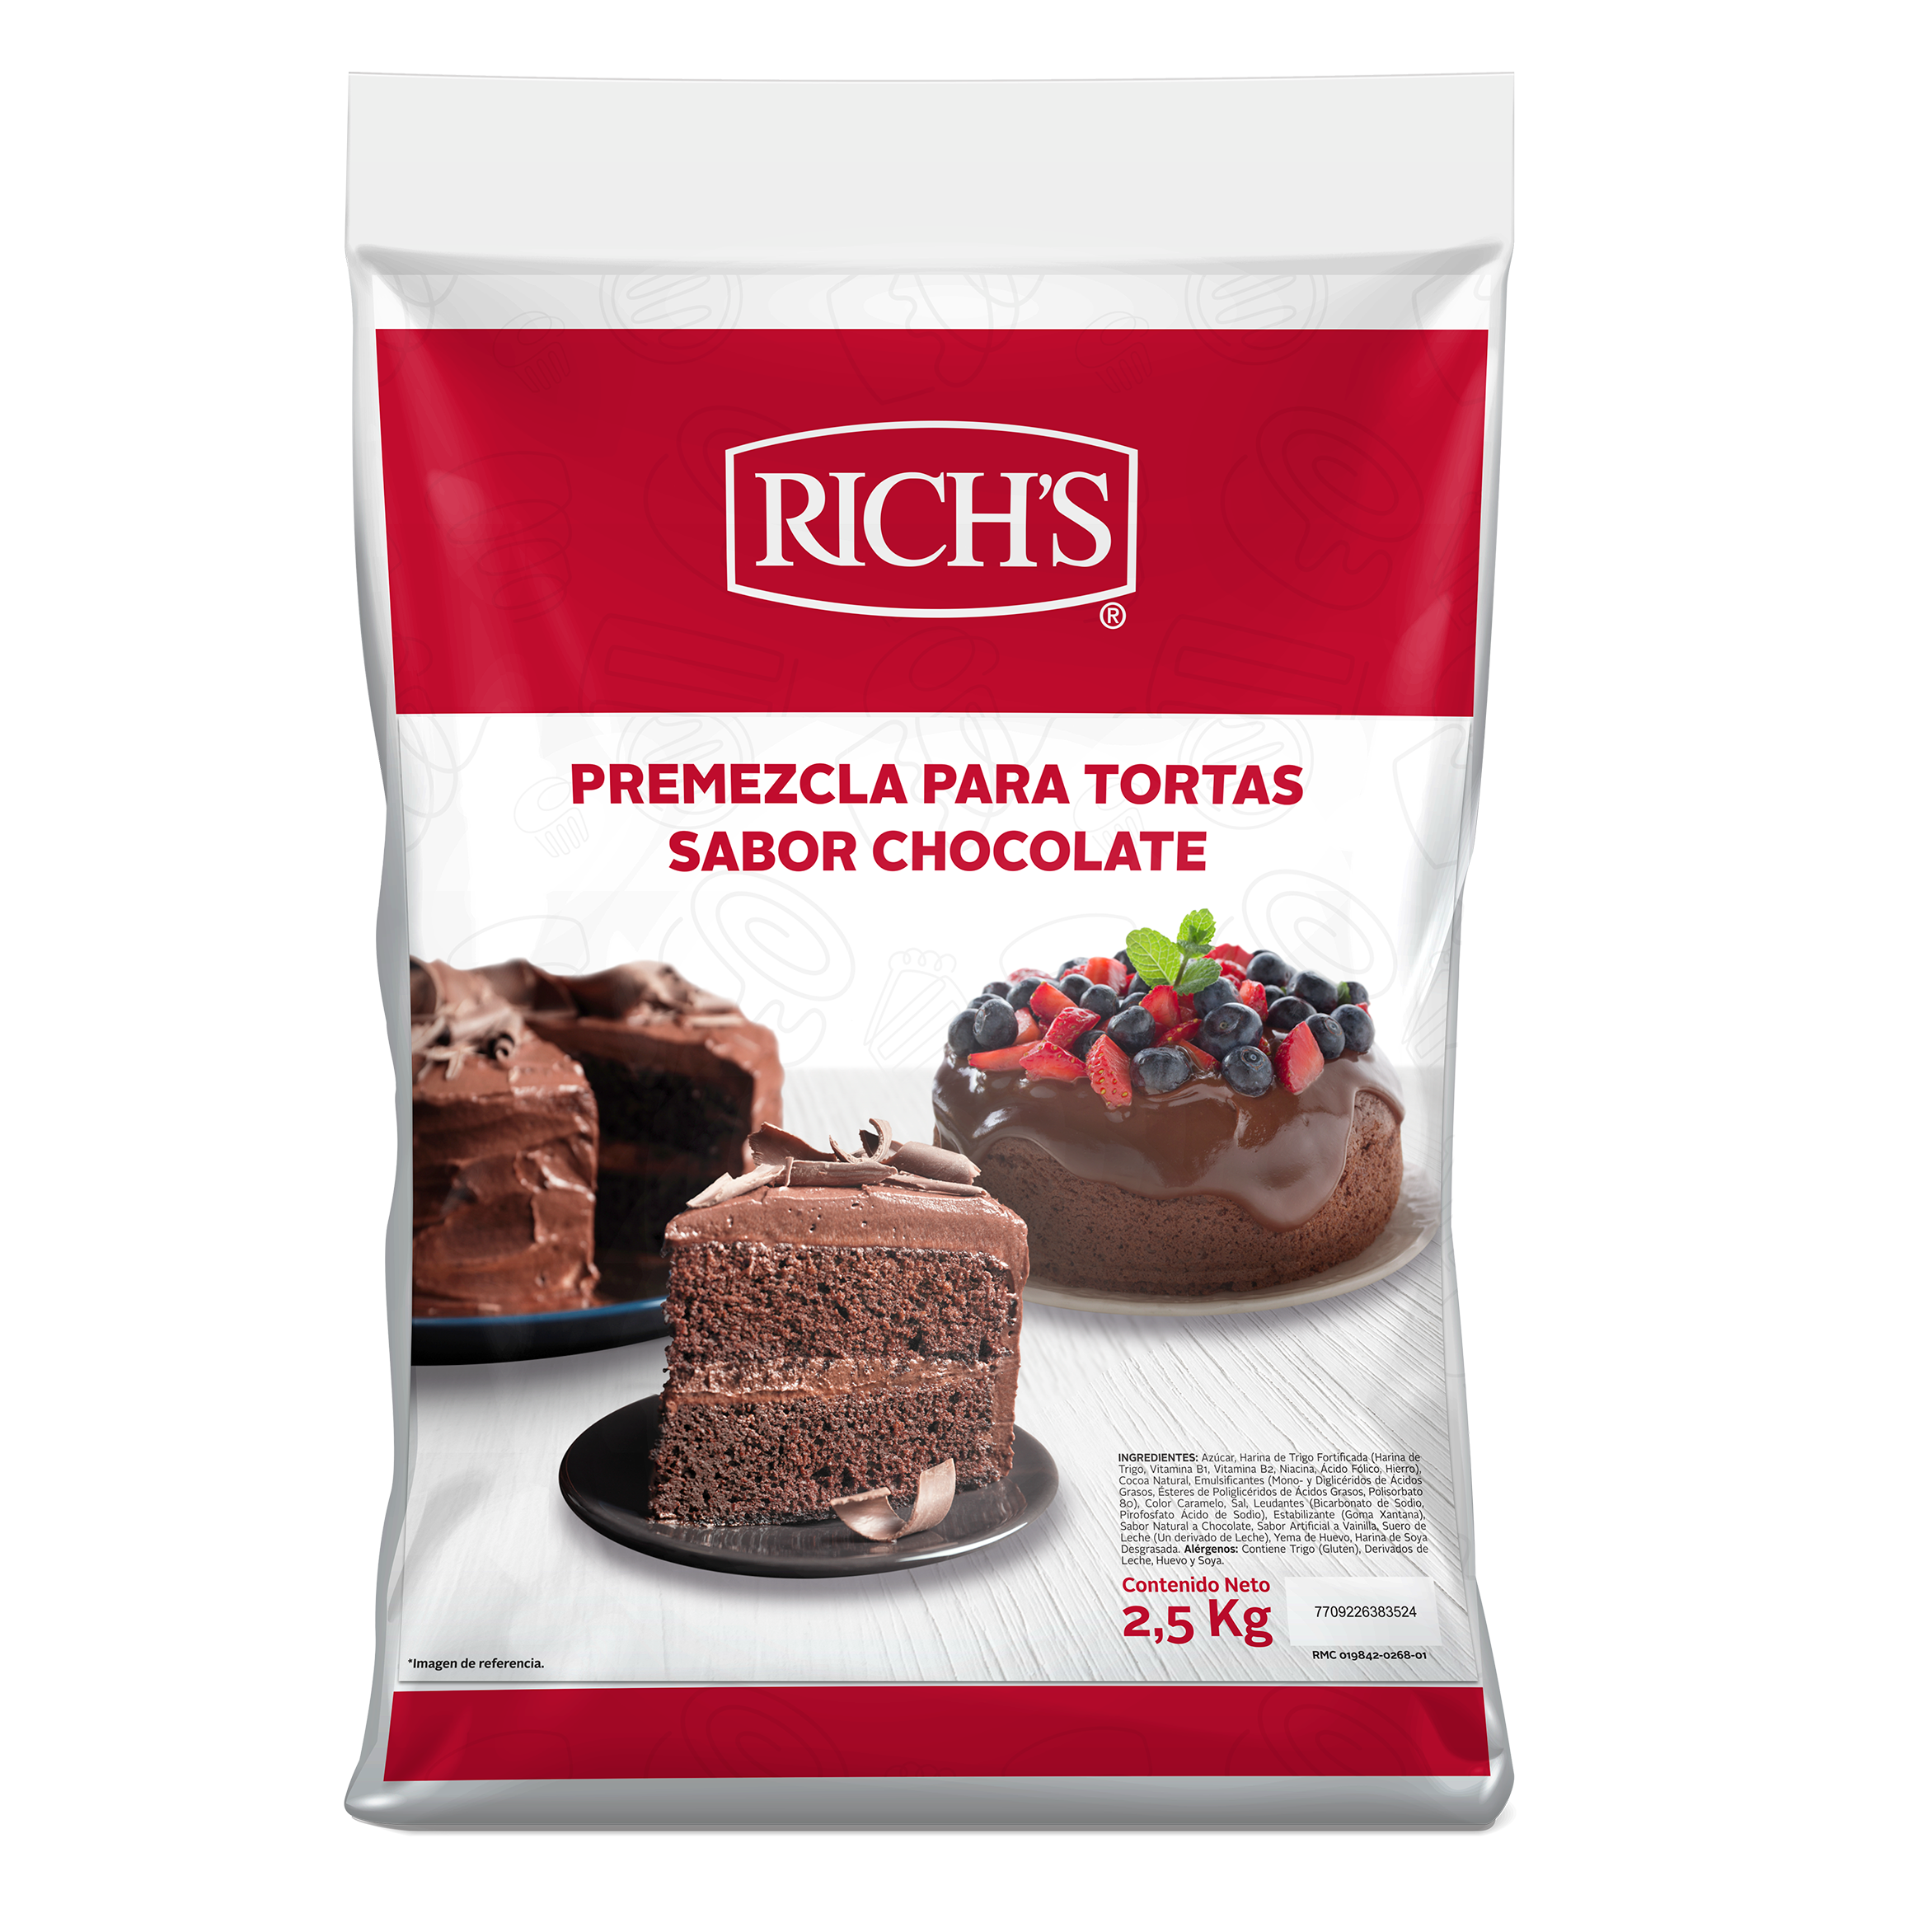 Premezcla Chocolate Rich's  — Dispropan Caribe Ltda